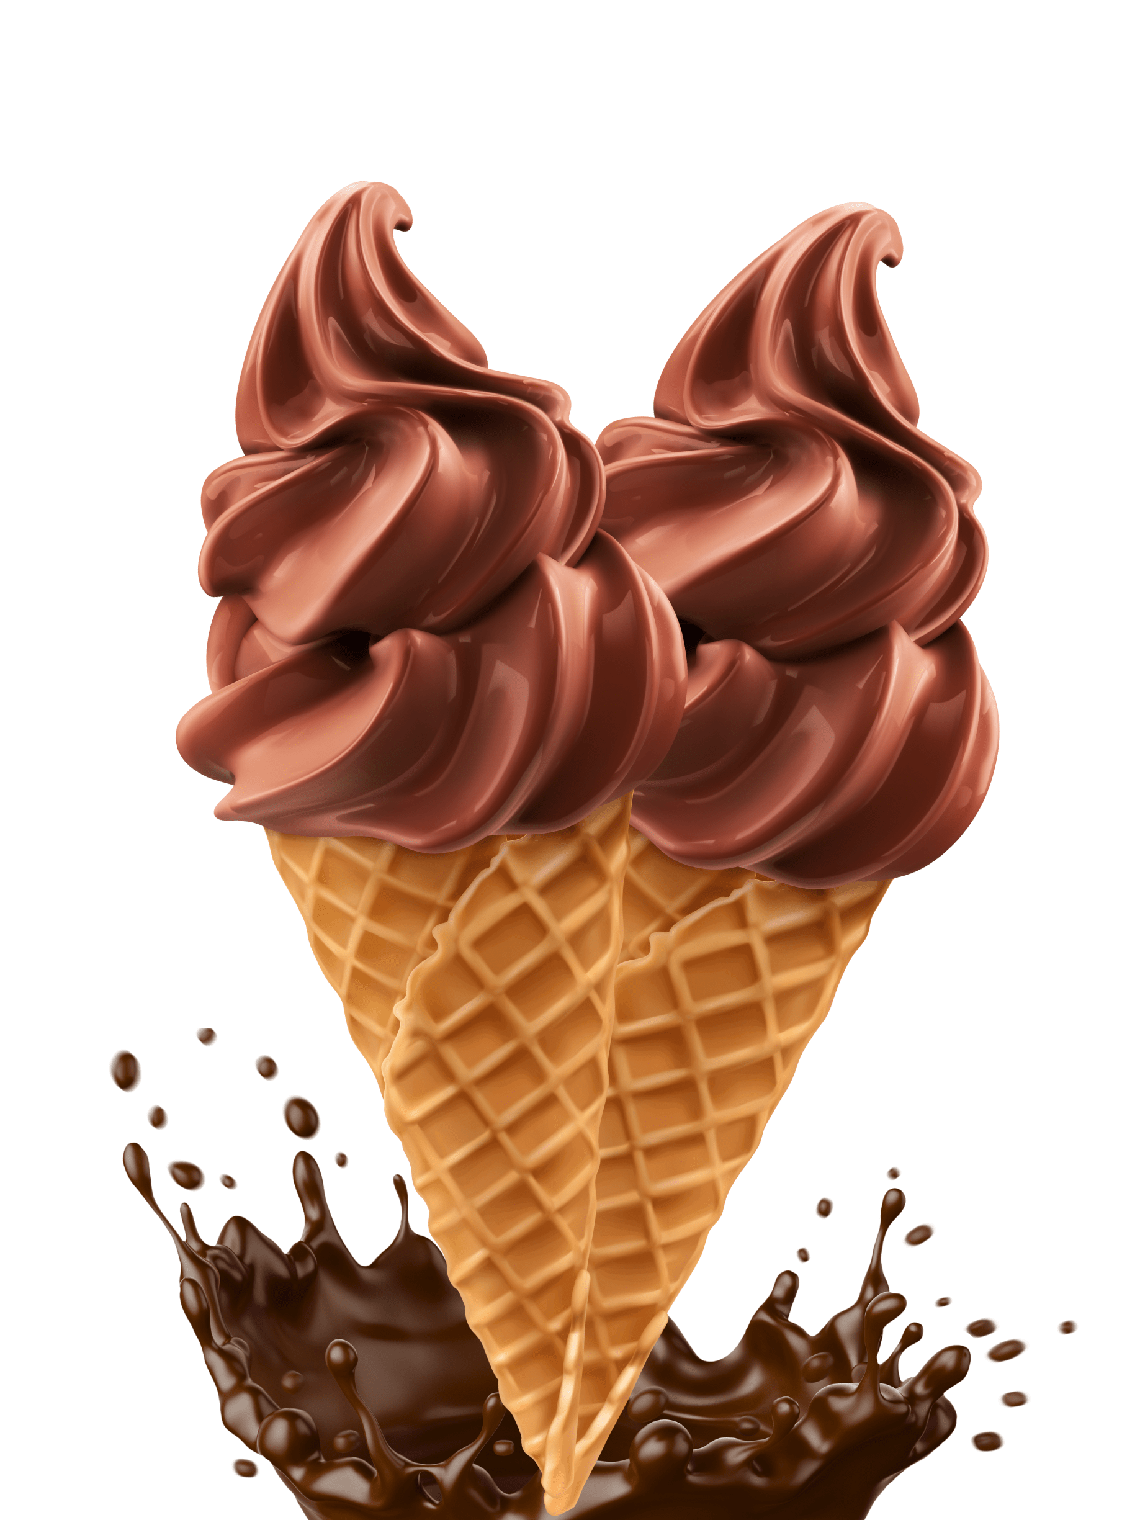 Soft Serve Ice Cream Chocolate main image